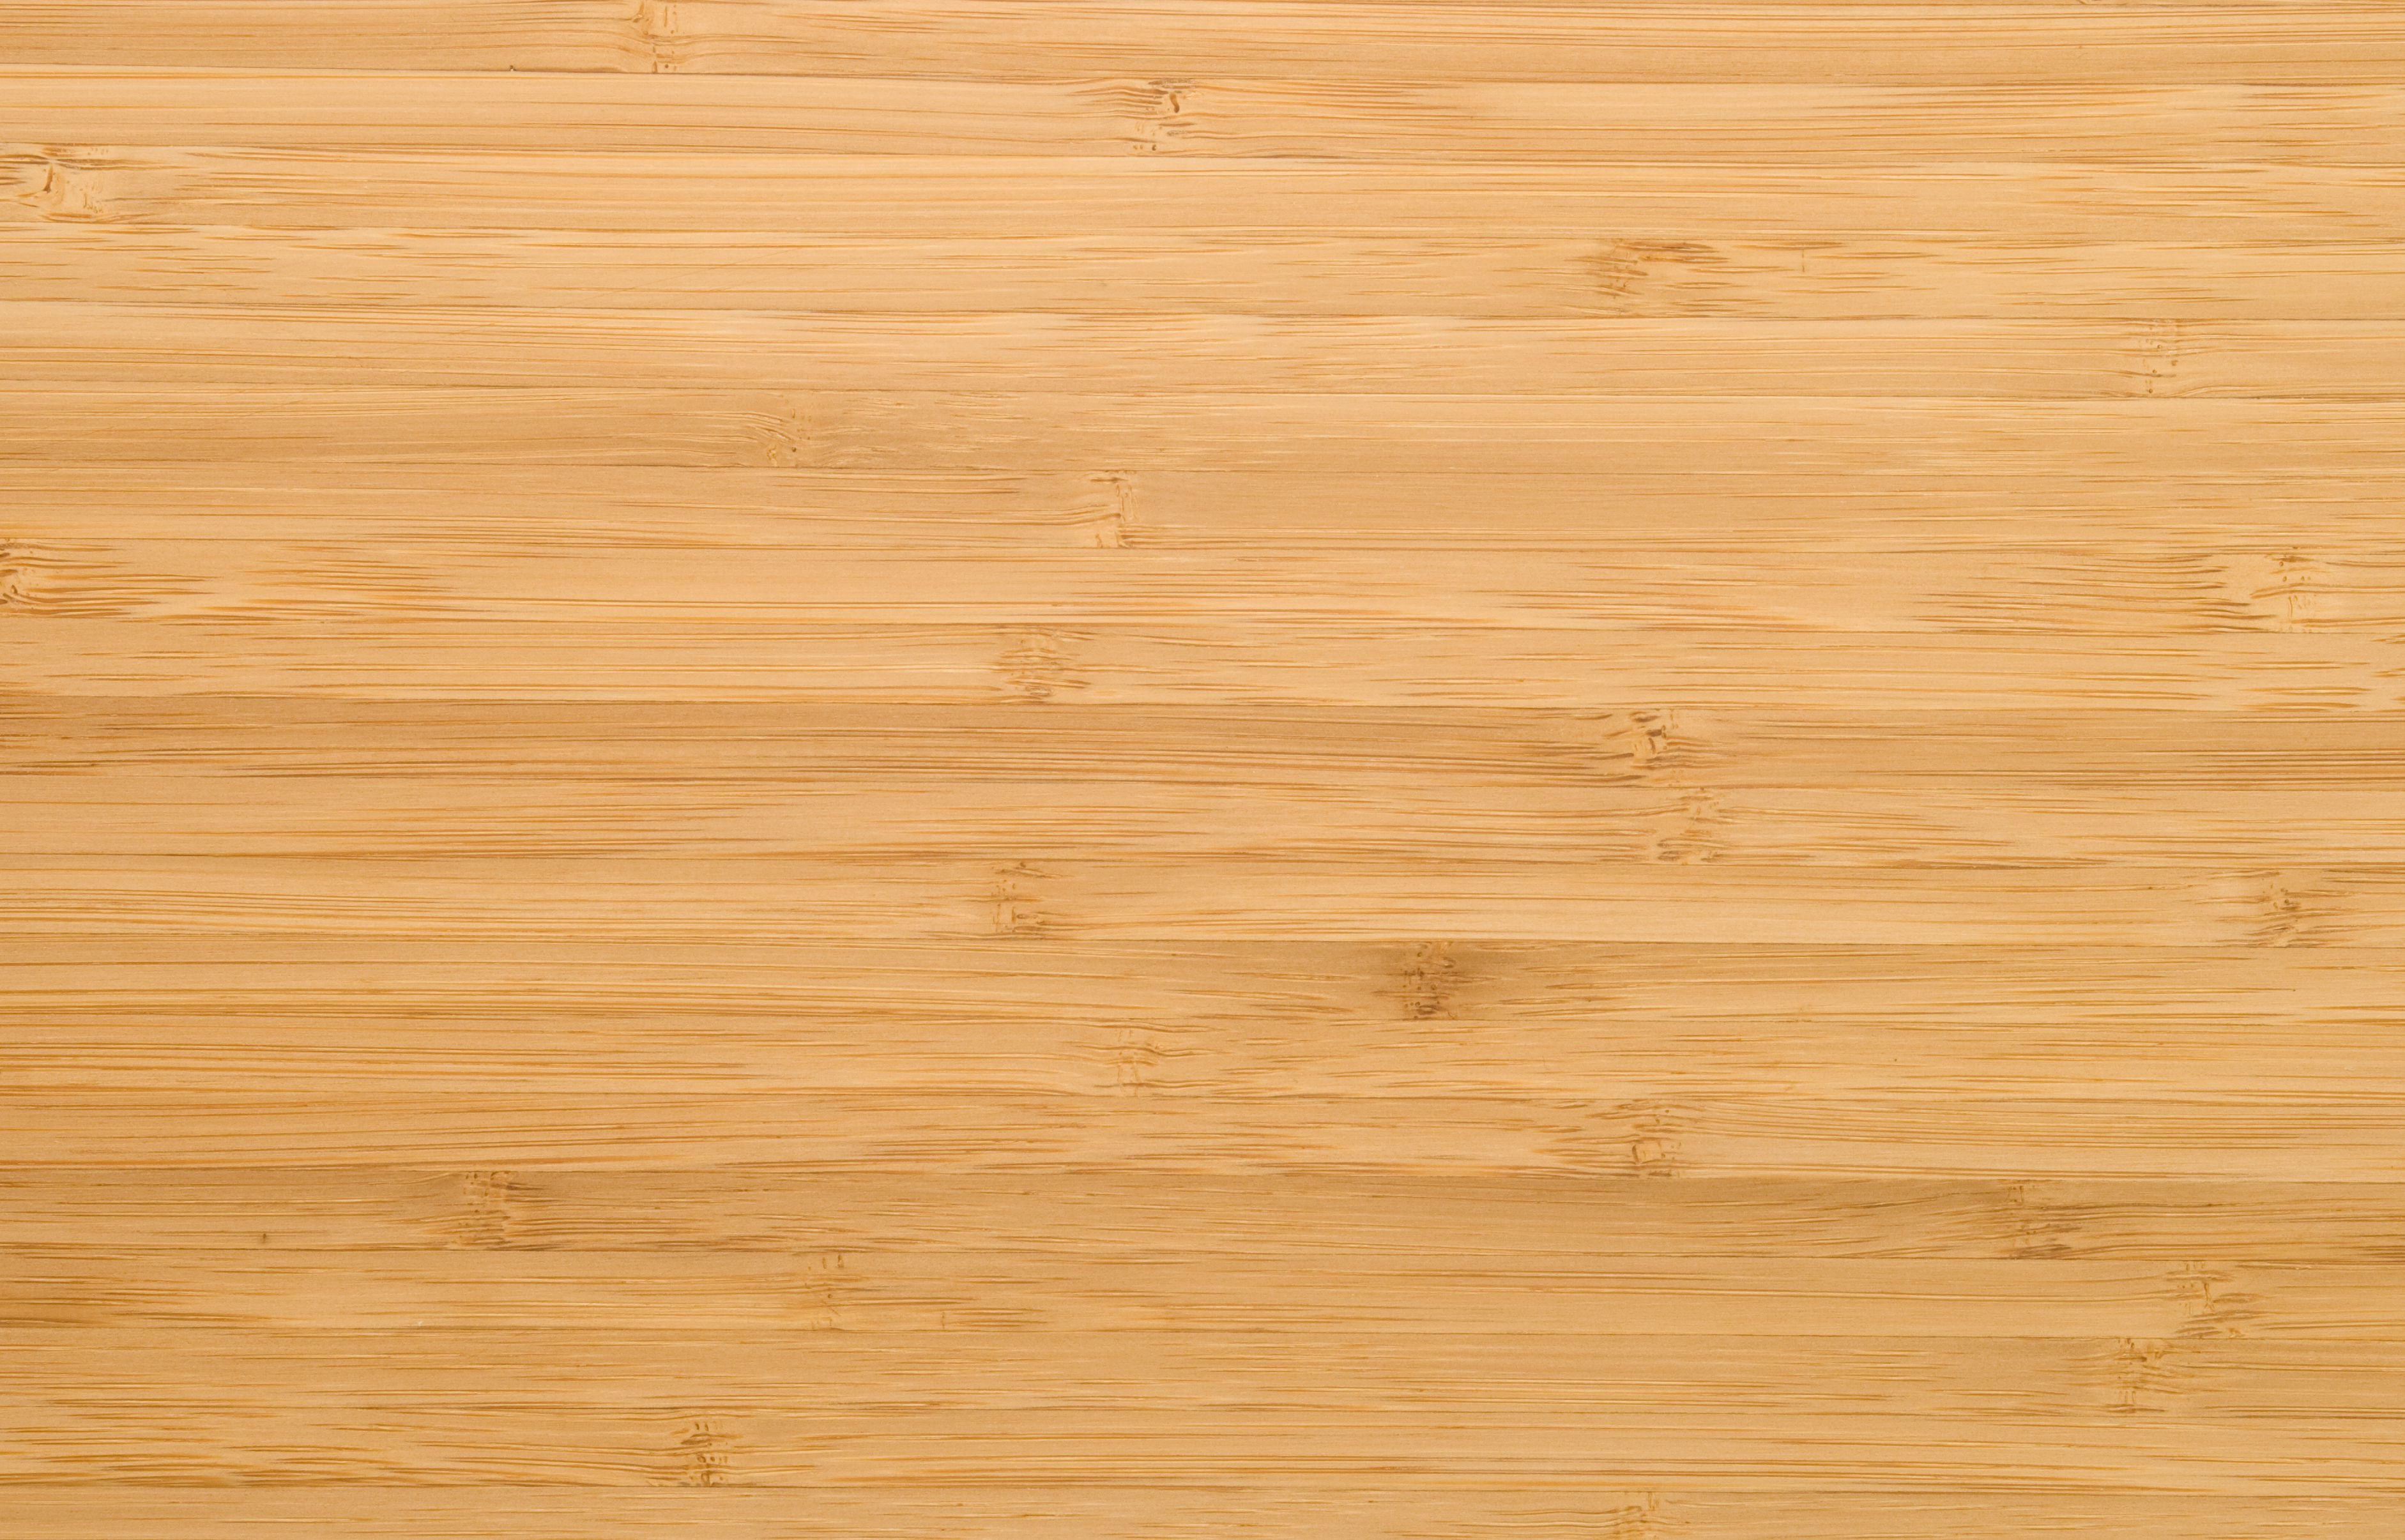 20 Stylish Install Hardwood Floor Around Stairs 2024 free download install hardwood floor around stairs of 31 unique bamboo vs hardwood flooring photograph flooring design ideas within bamboo vs hardwood flooring luxury cleaning and maintaining bamboo floor